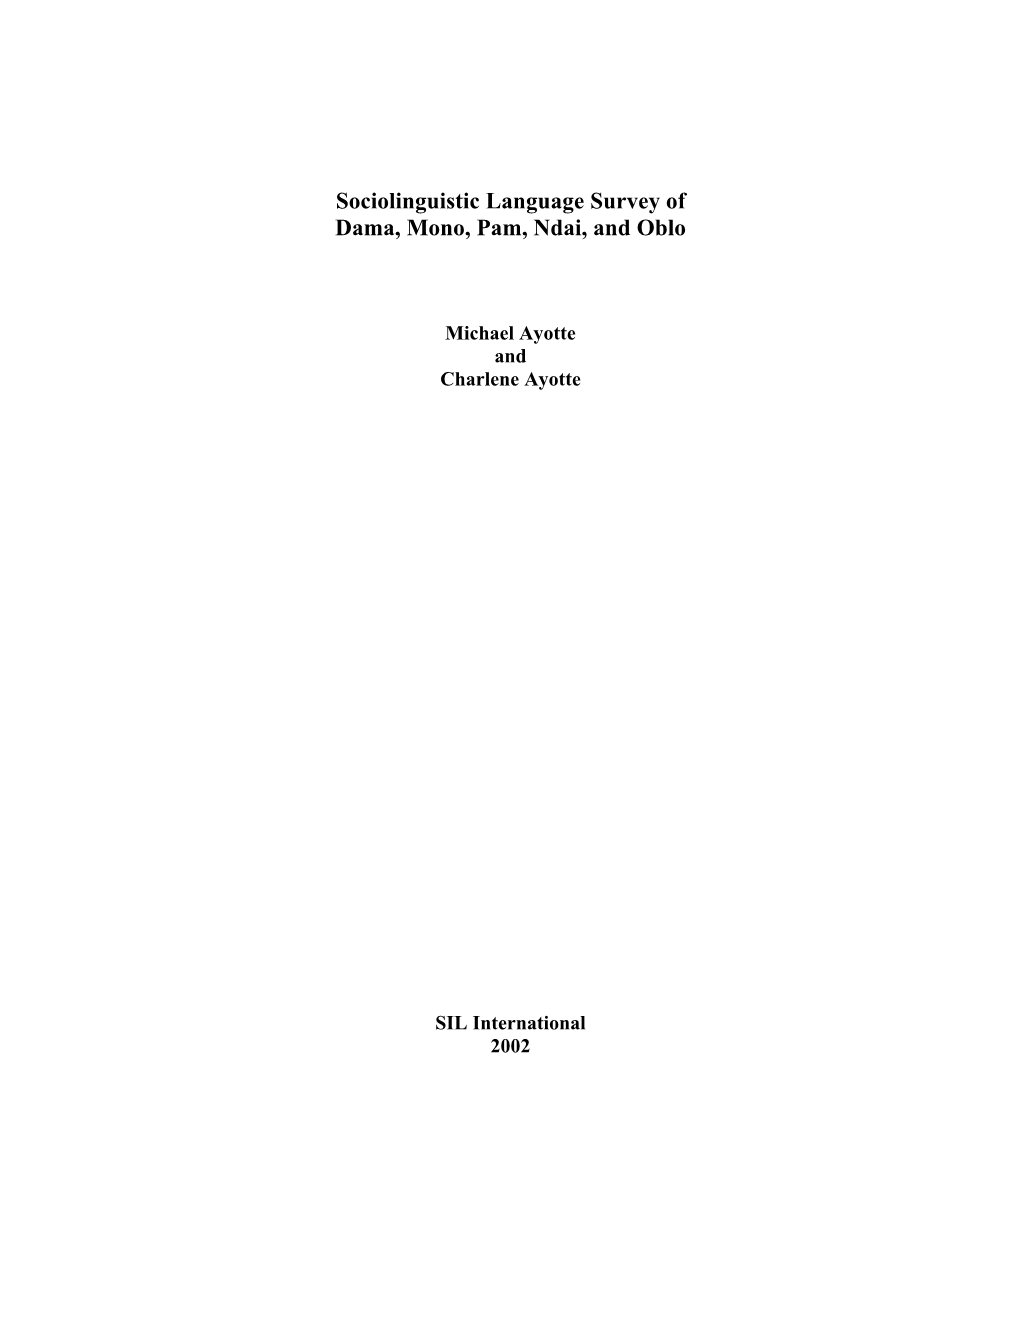 Sociolinguistic Language Survey of Dama, Mono, Pam, Ndai, and Oblo